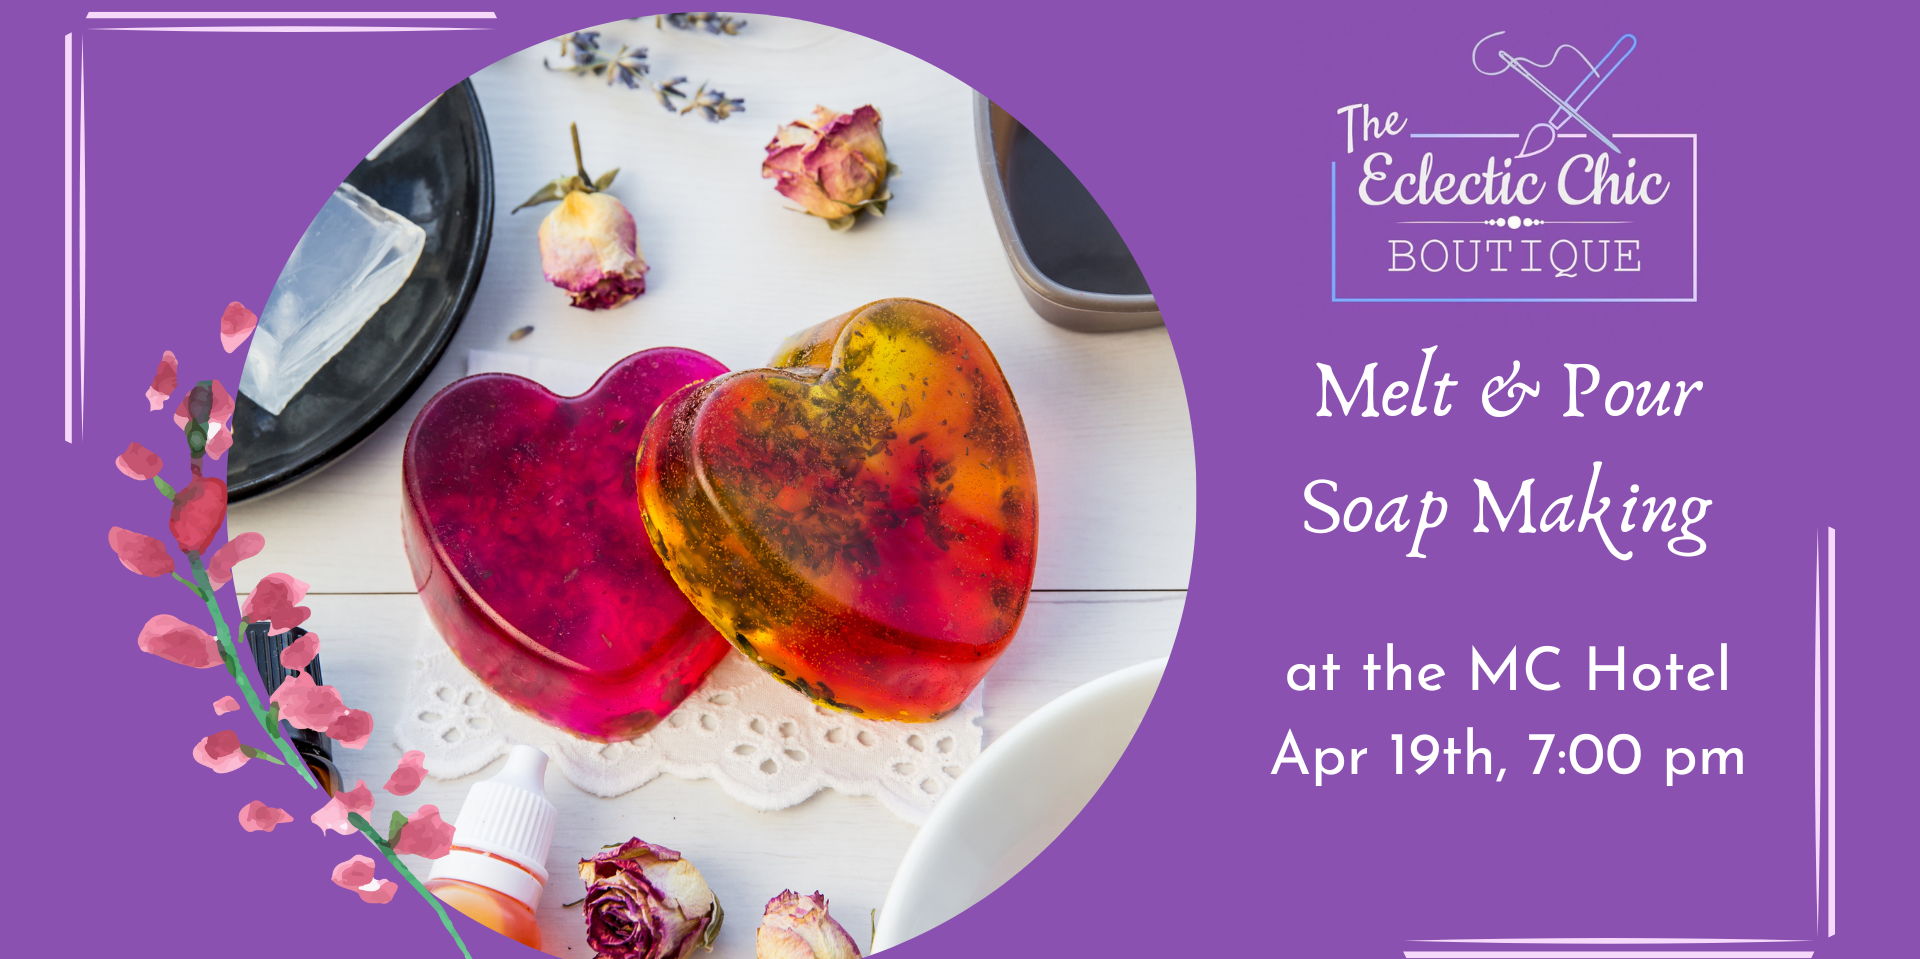 Melt & Pour Soap Making at MC Hotel promotional image